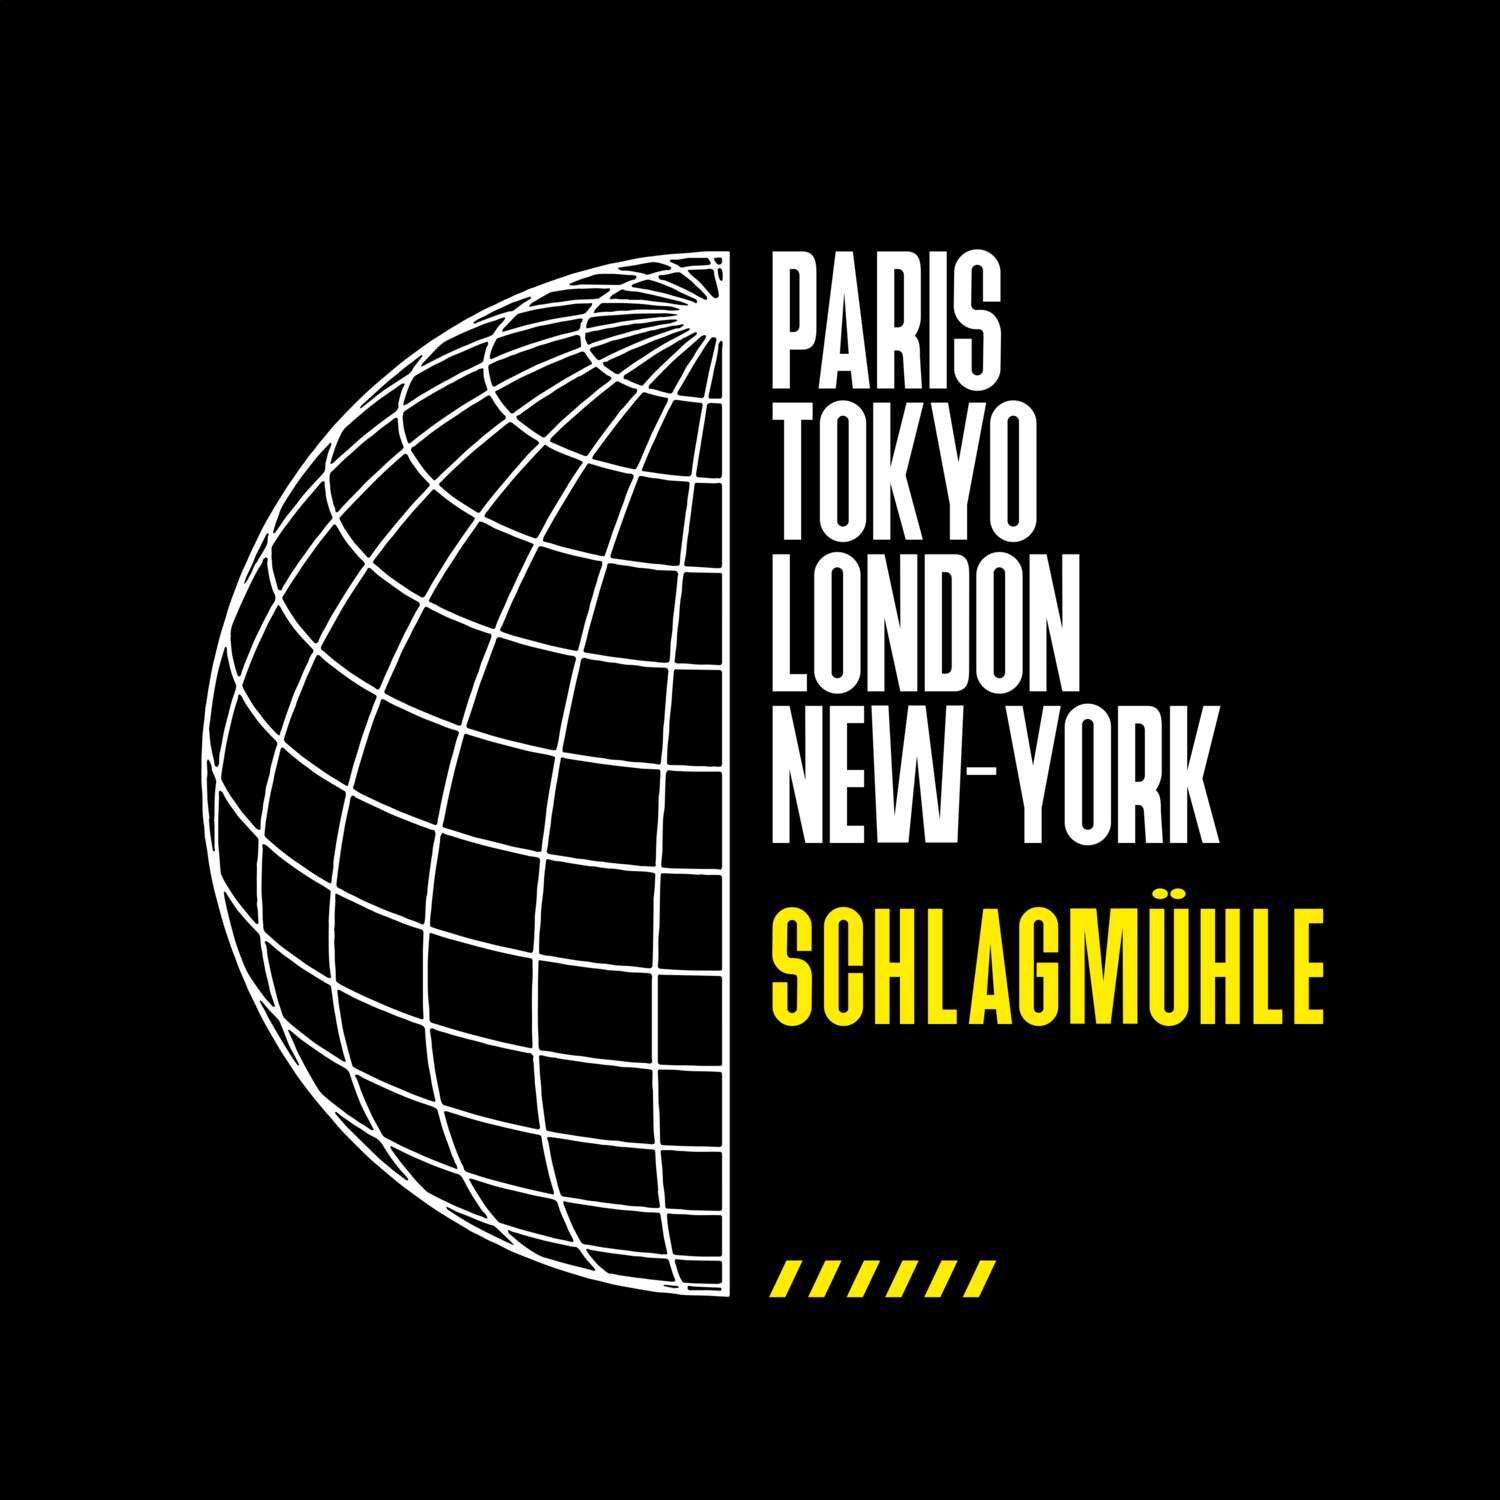 Schlagmühle T-Shirt »Paris Tokyo London«